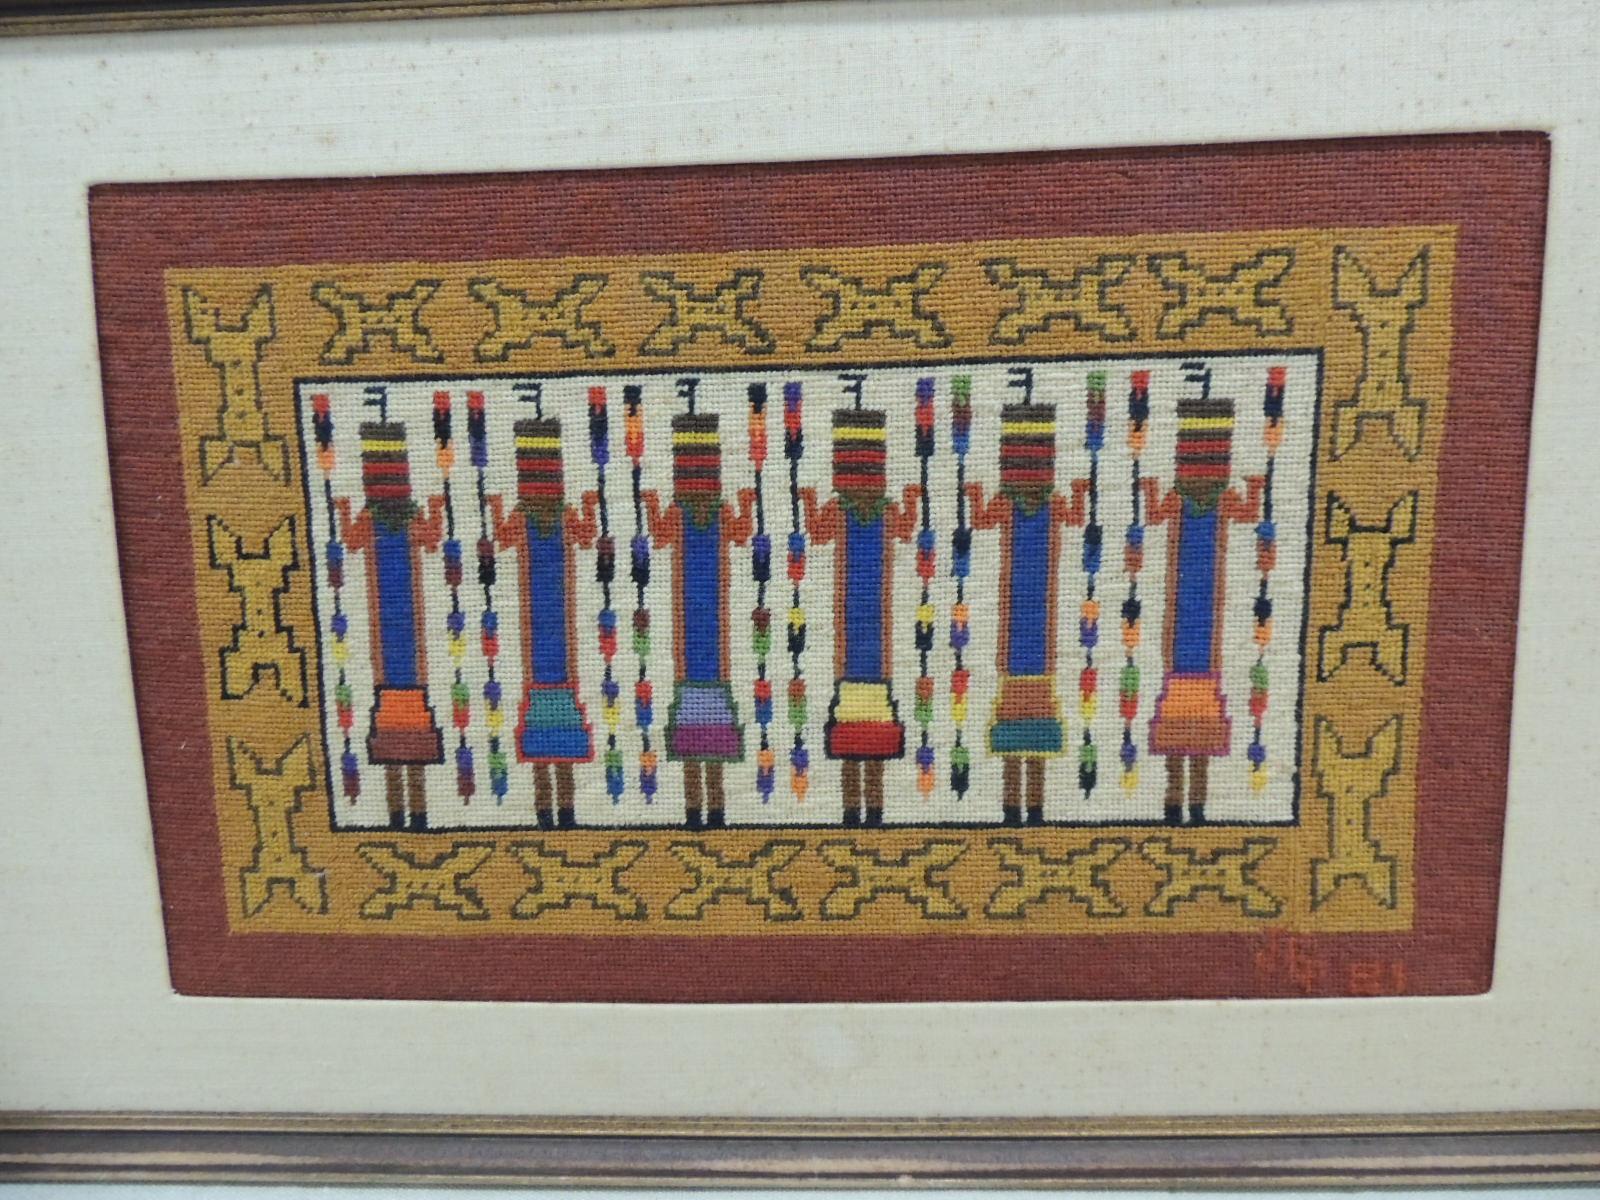 Vintage Navajo YEI style framed tapestry.
Wood frame, raffia matting no glass.
Size: 24.5” W x 15” H x 3/4” D
Tapestry size: 10.5” H x 17” W.